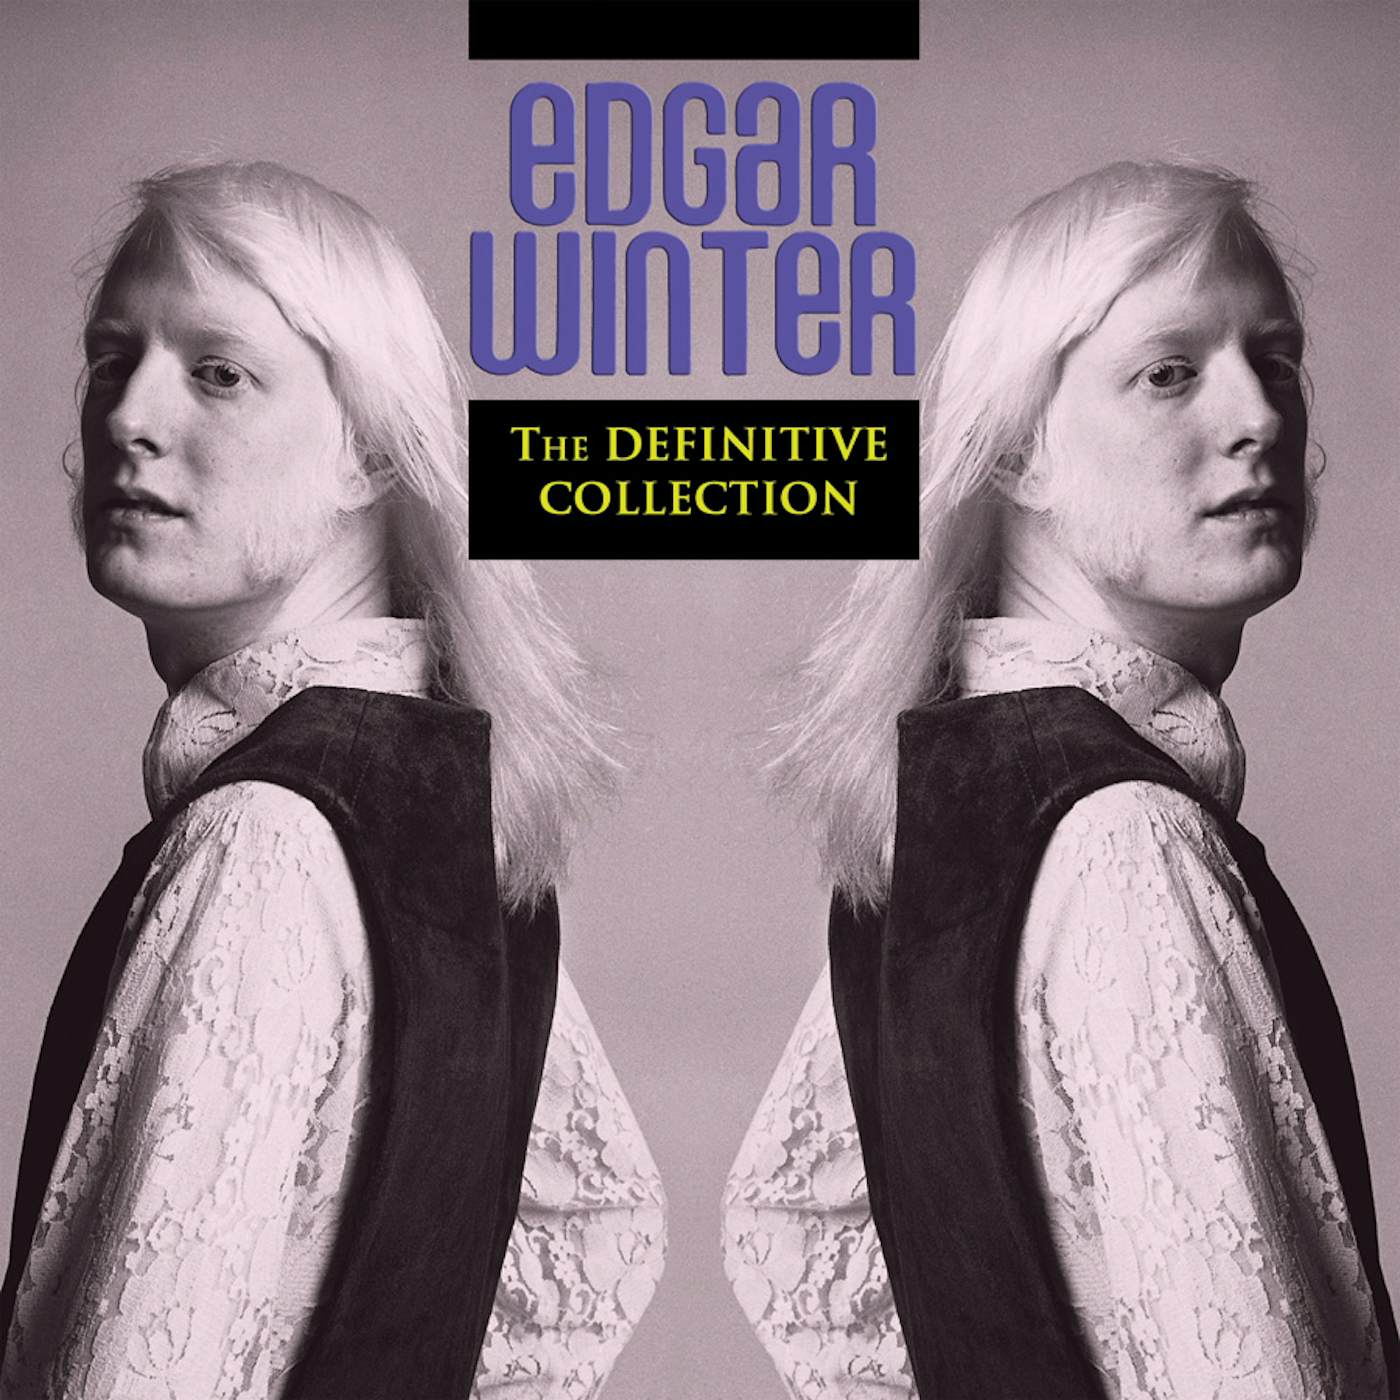 Edgar Winter DEFINITIVE COLLECTION CD